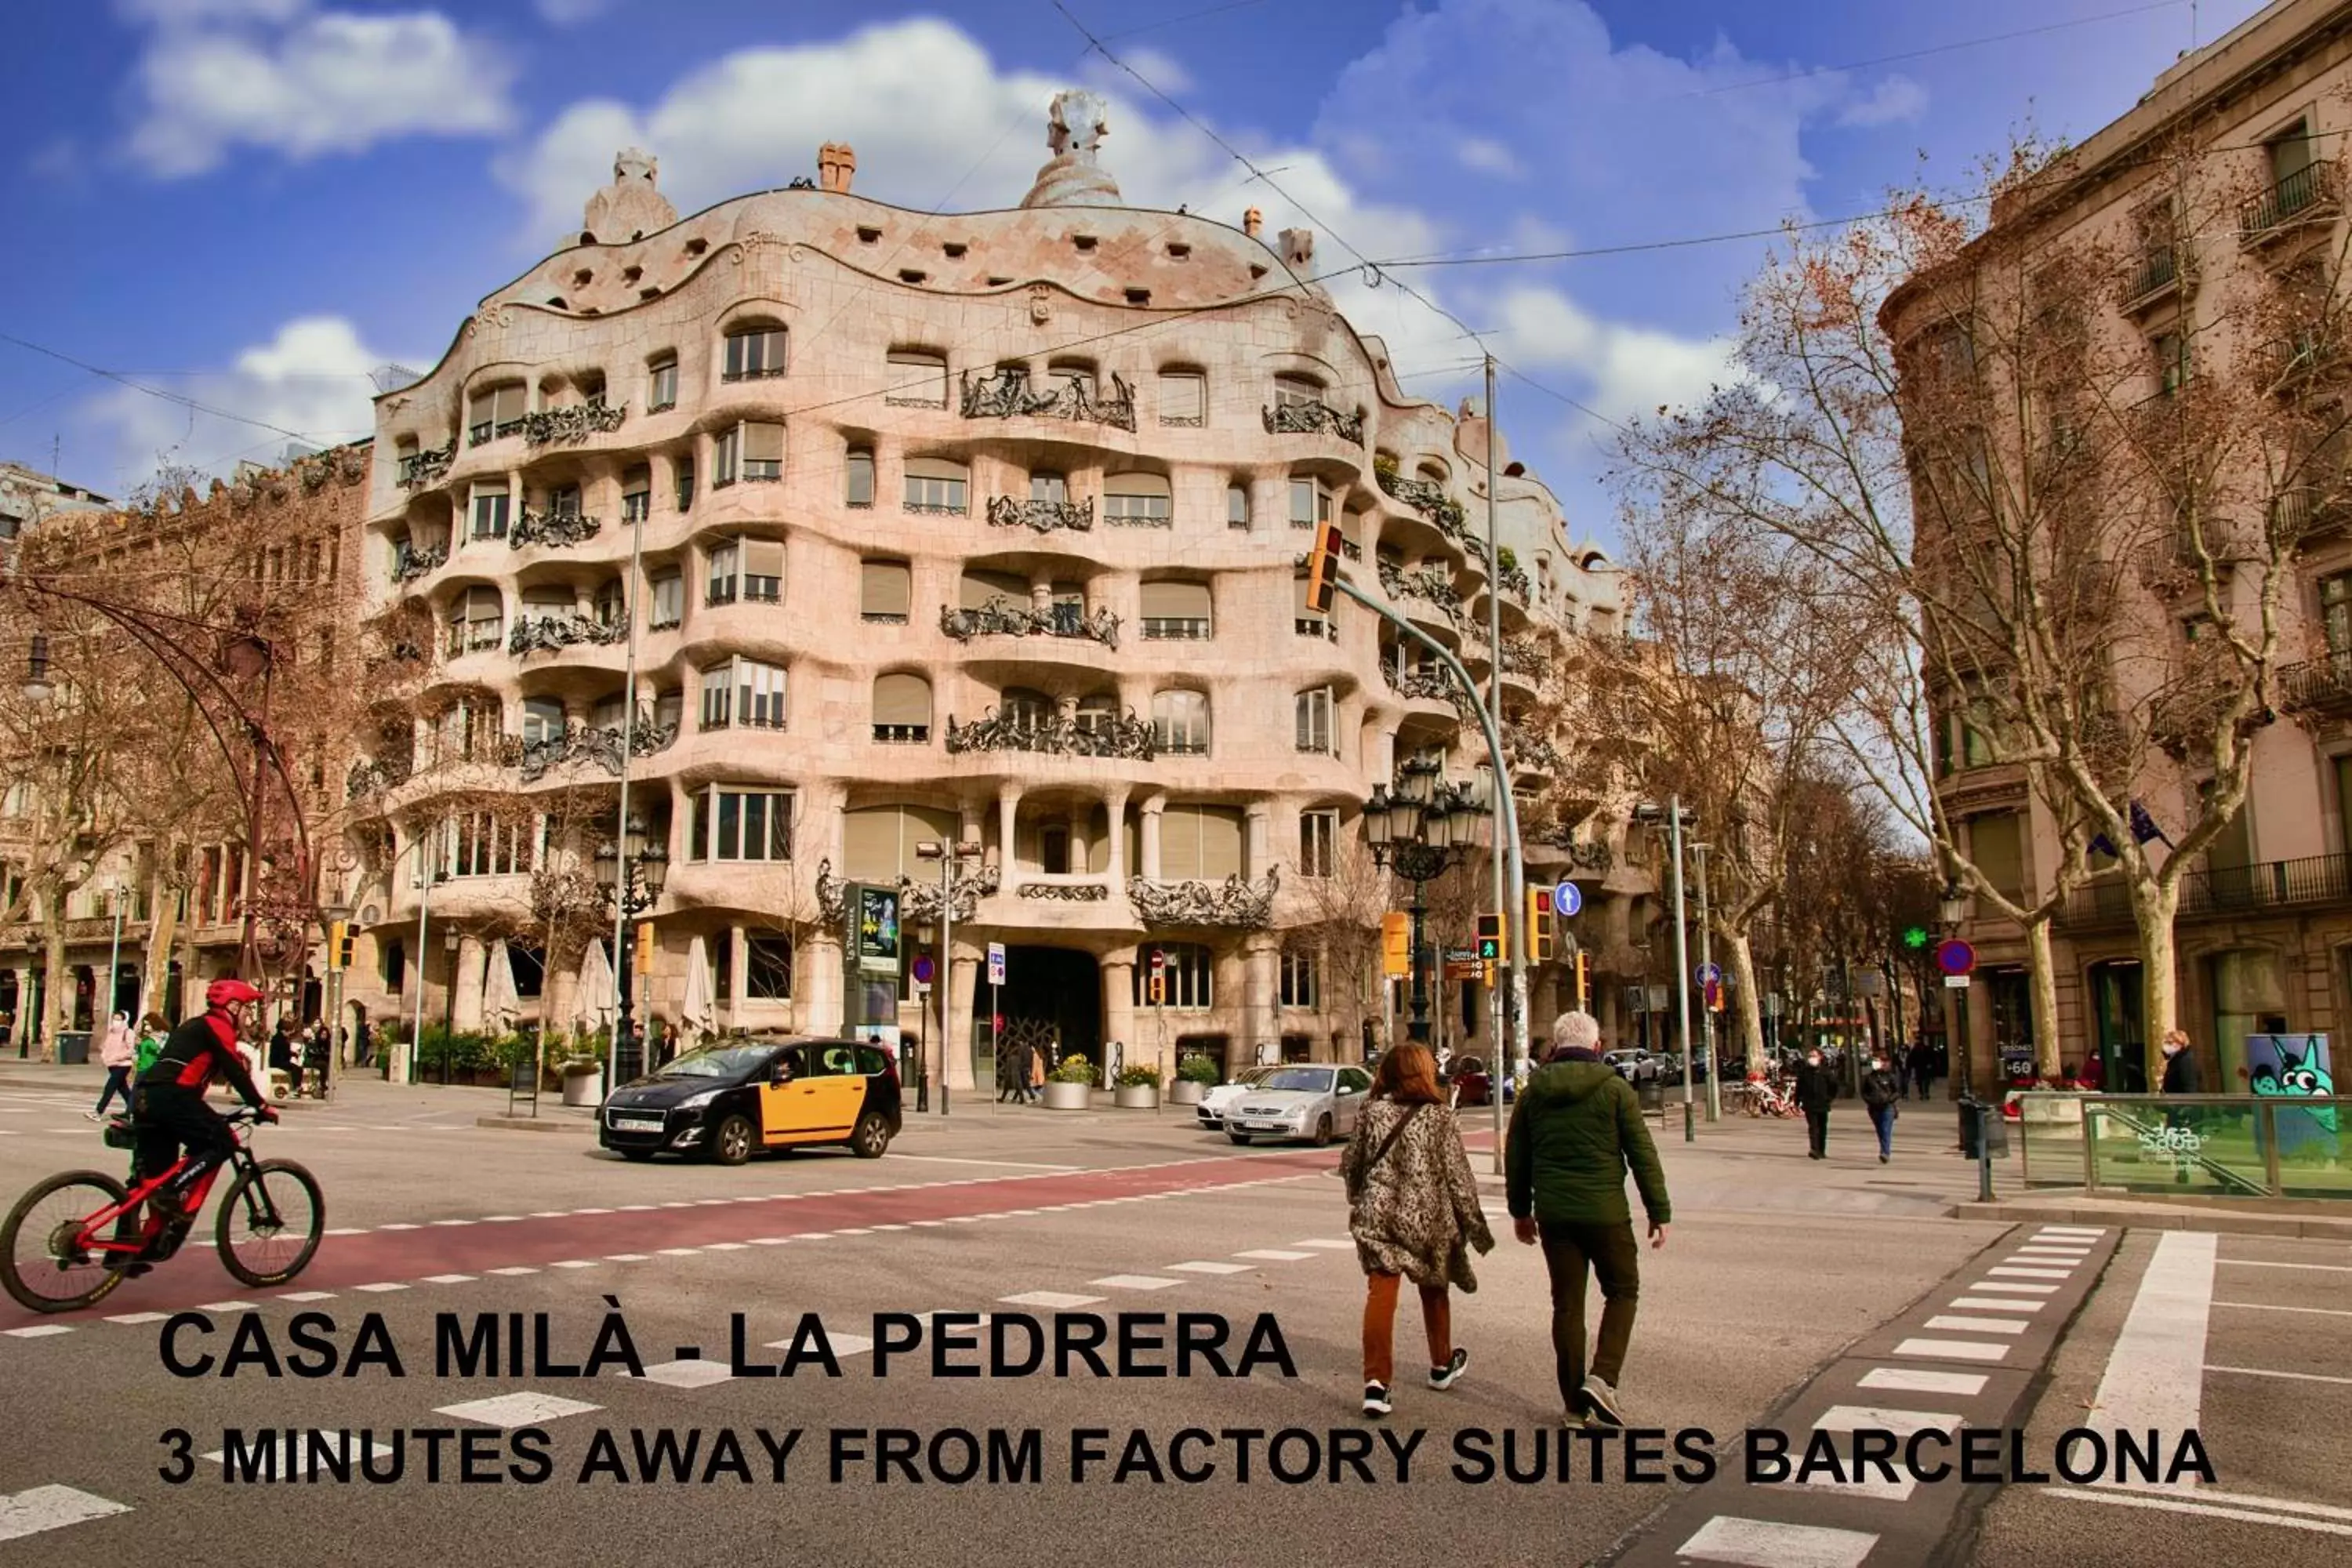 Nearby landmark in Factory Suites Barcelona